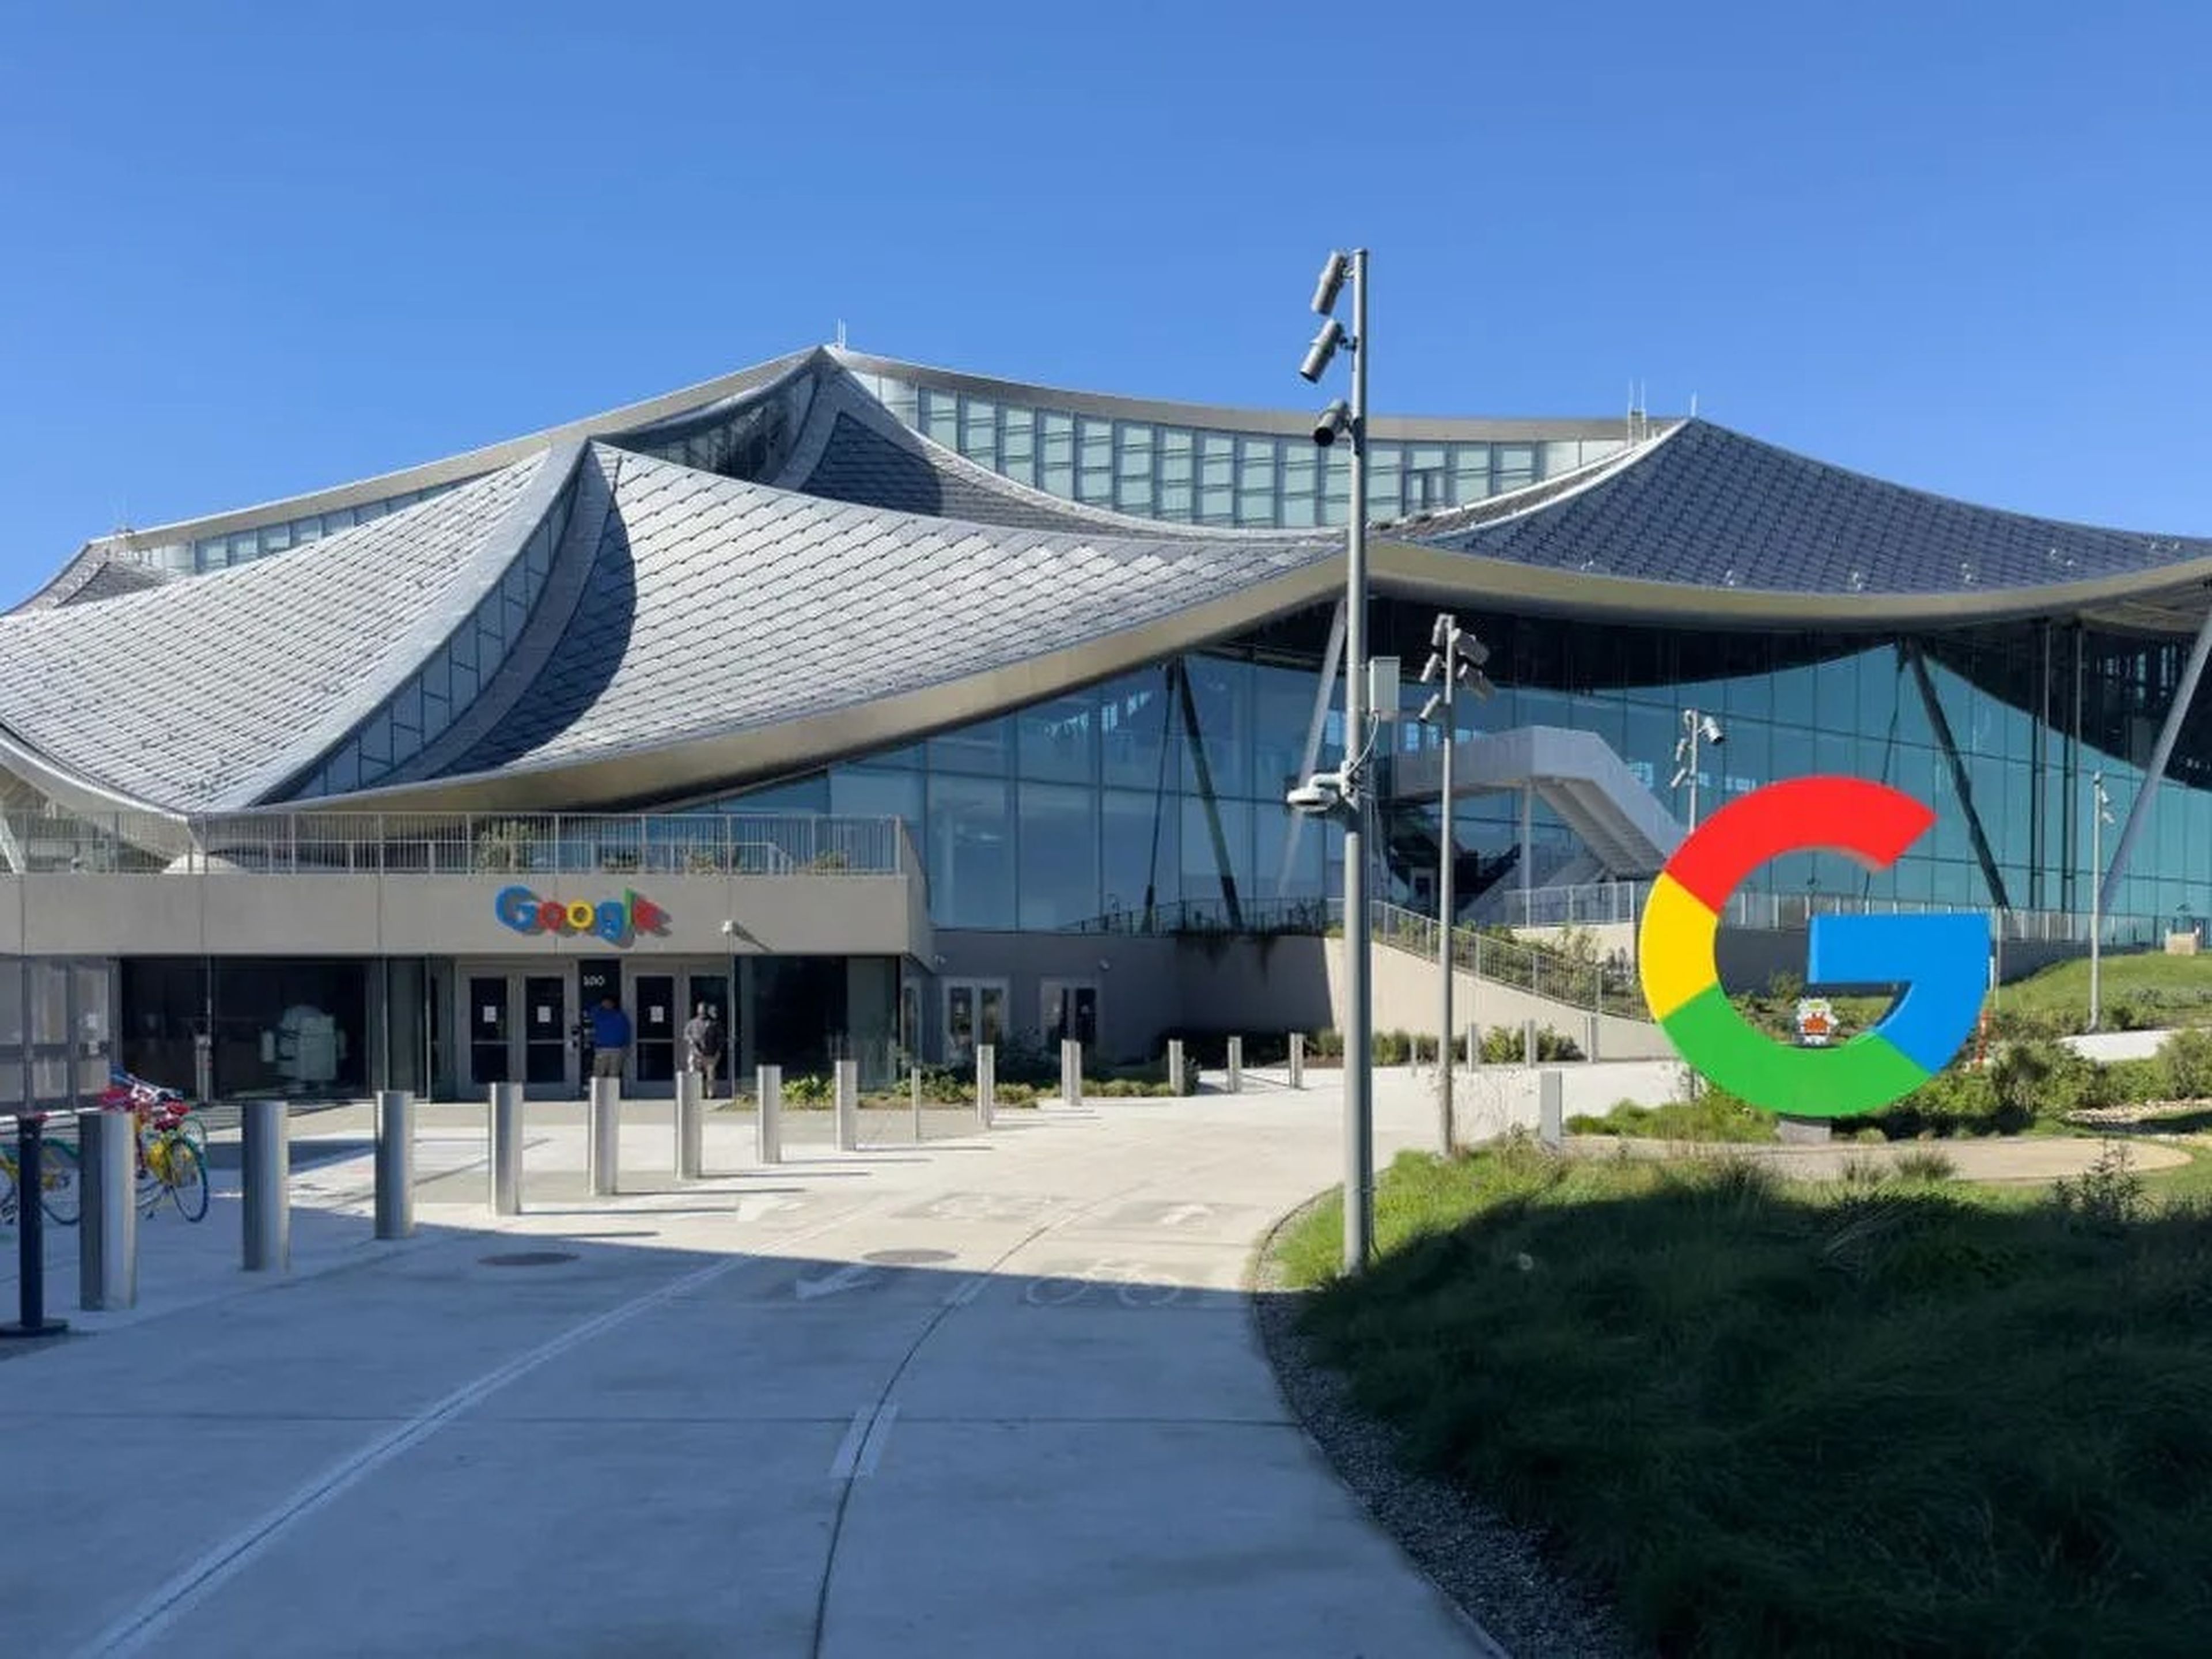 Vista del exterior de una de las sedes de Google.